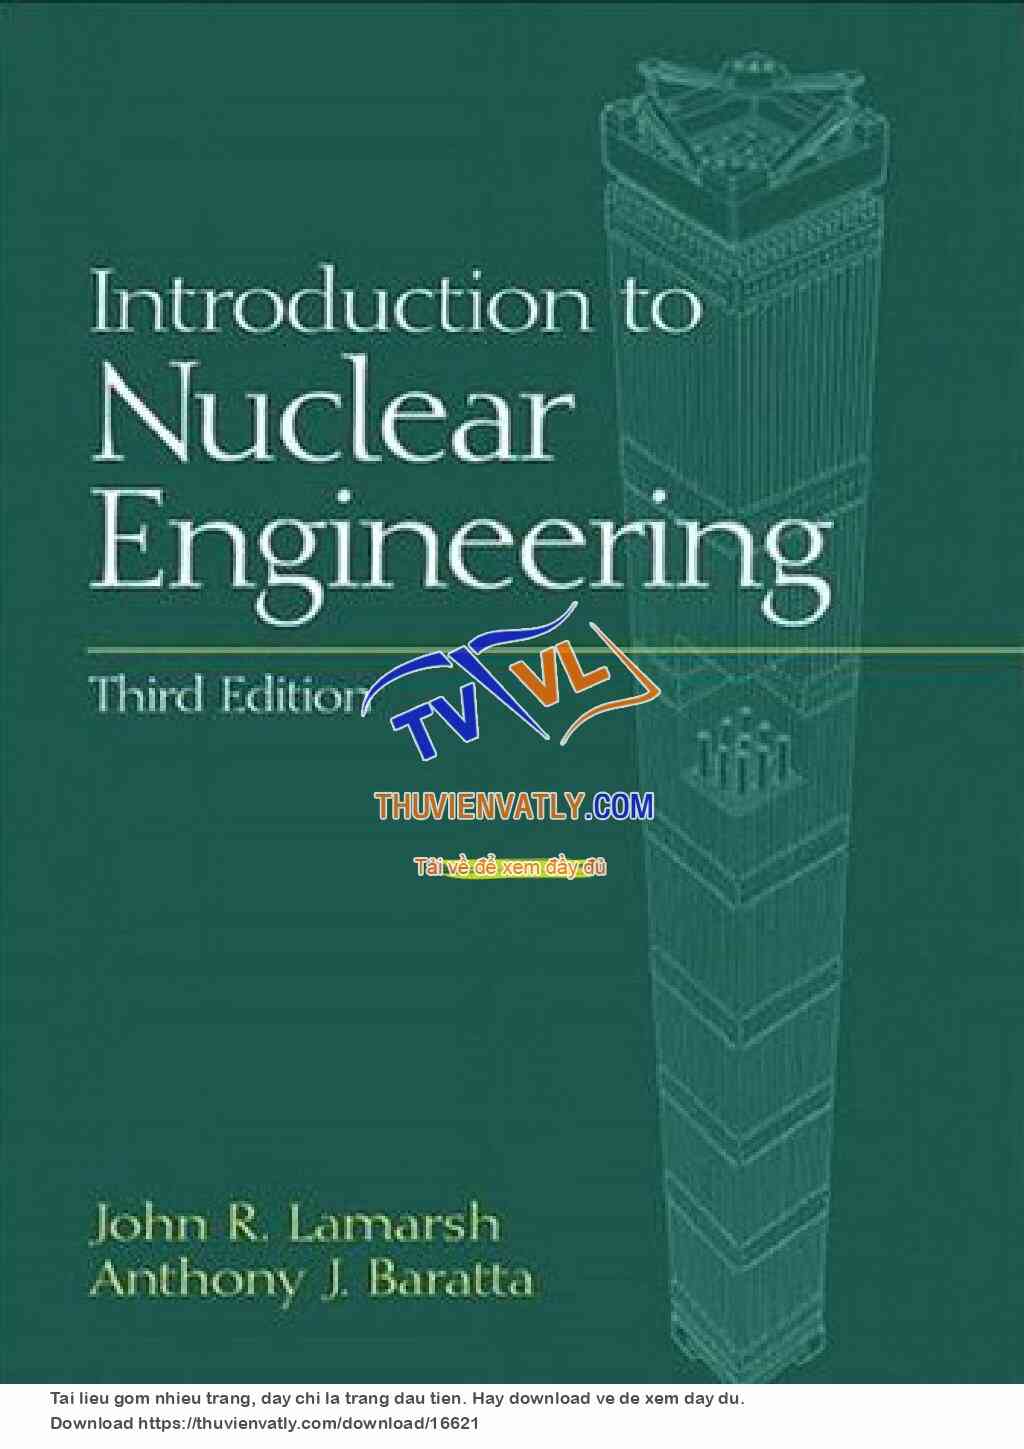 Introduction to Nuclear Engineering (John R. Lamarsh, Anthony  J. Baratta , Prentice-Hall 2001)